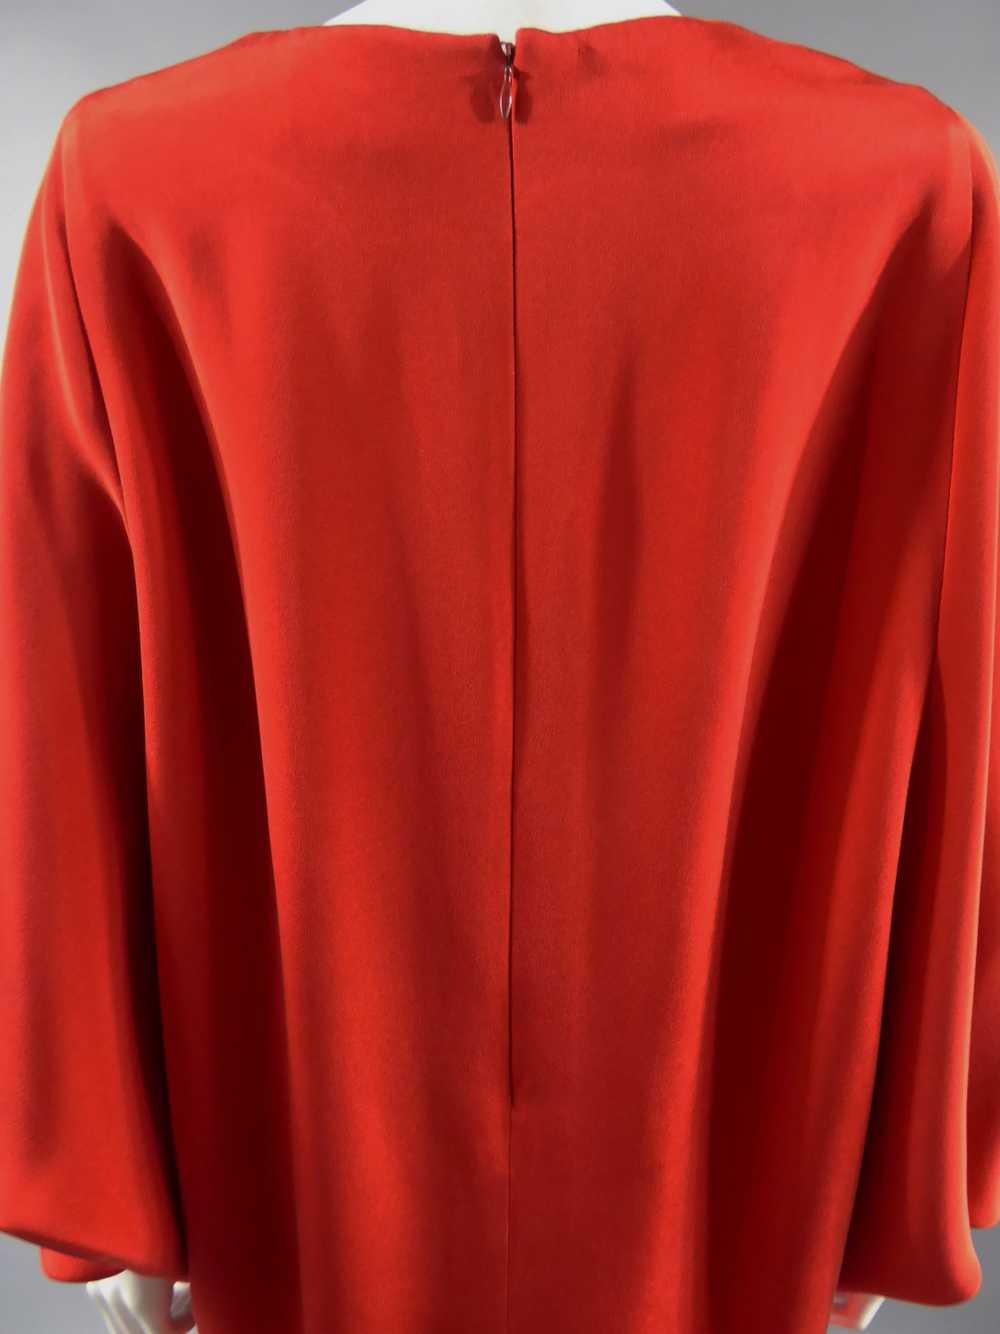 Pierre Cardin Batwing Sleeves Dress - image 7